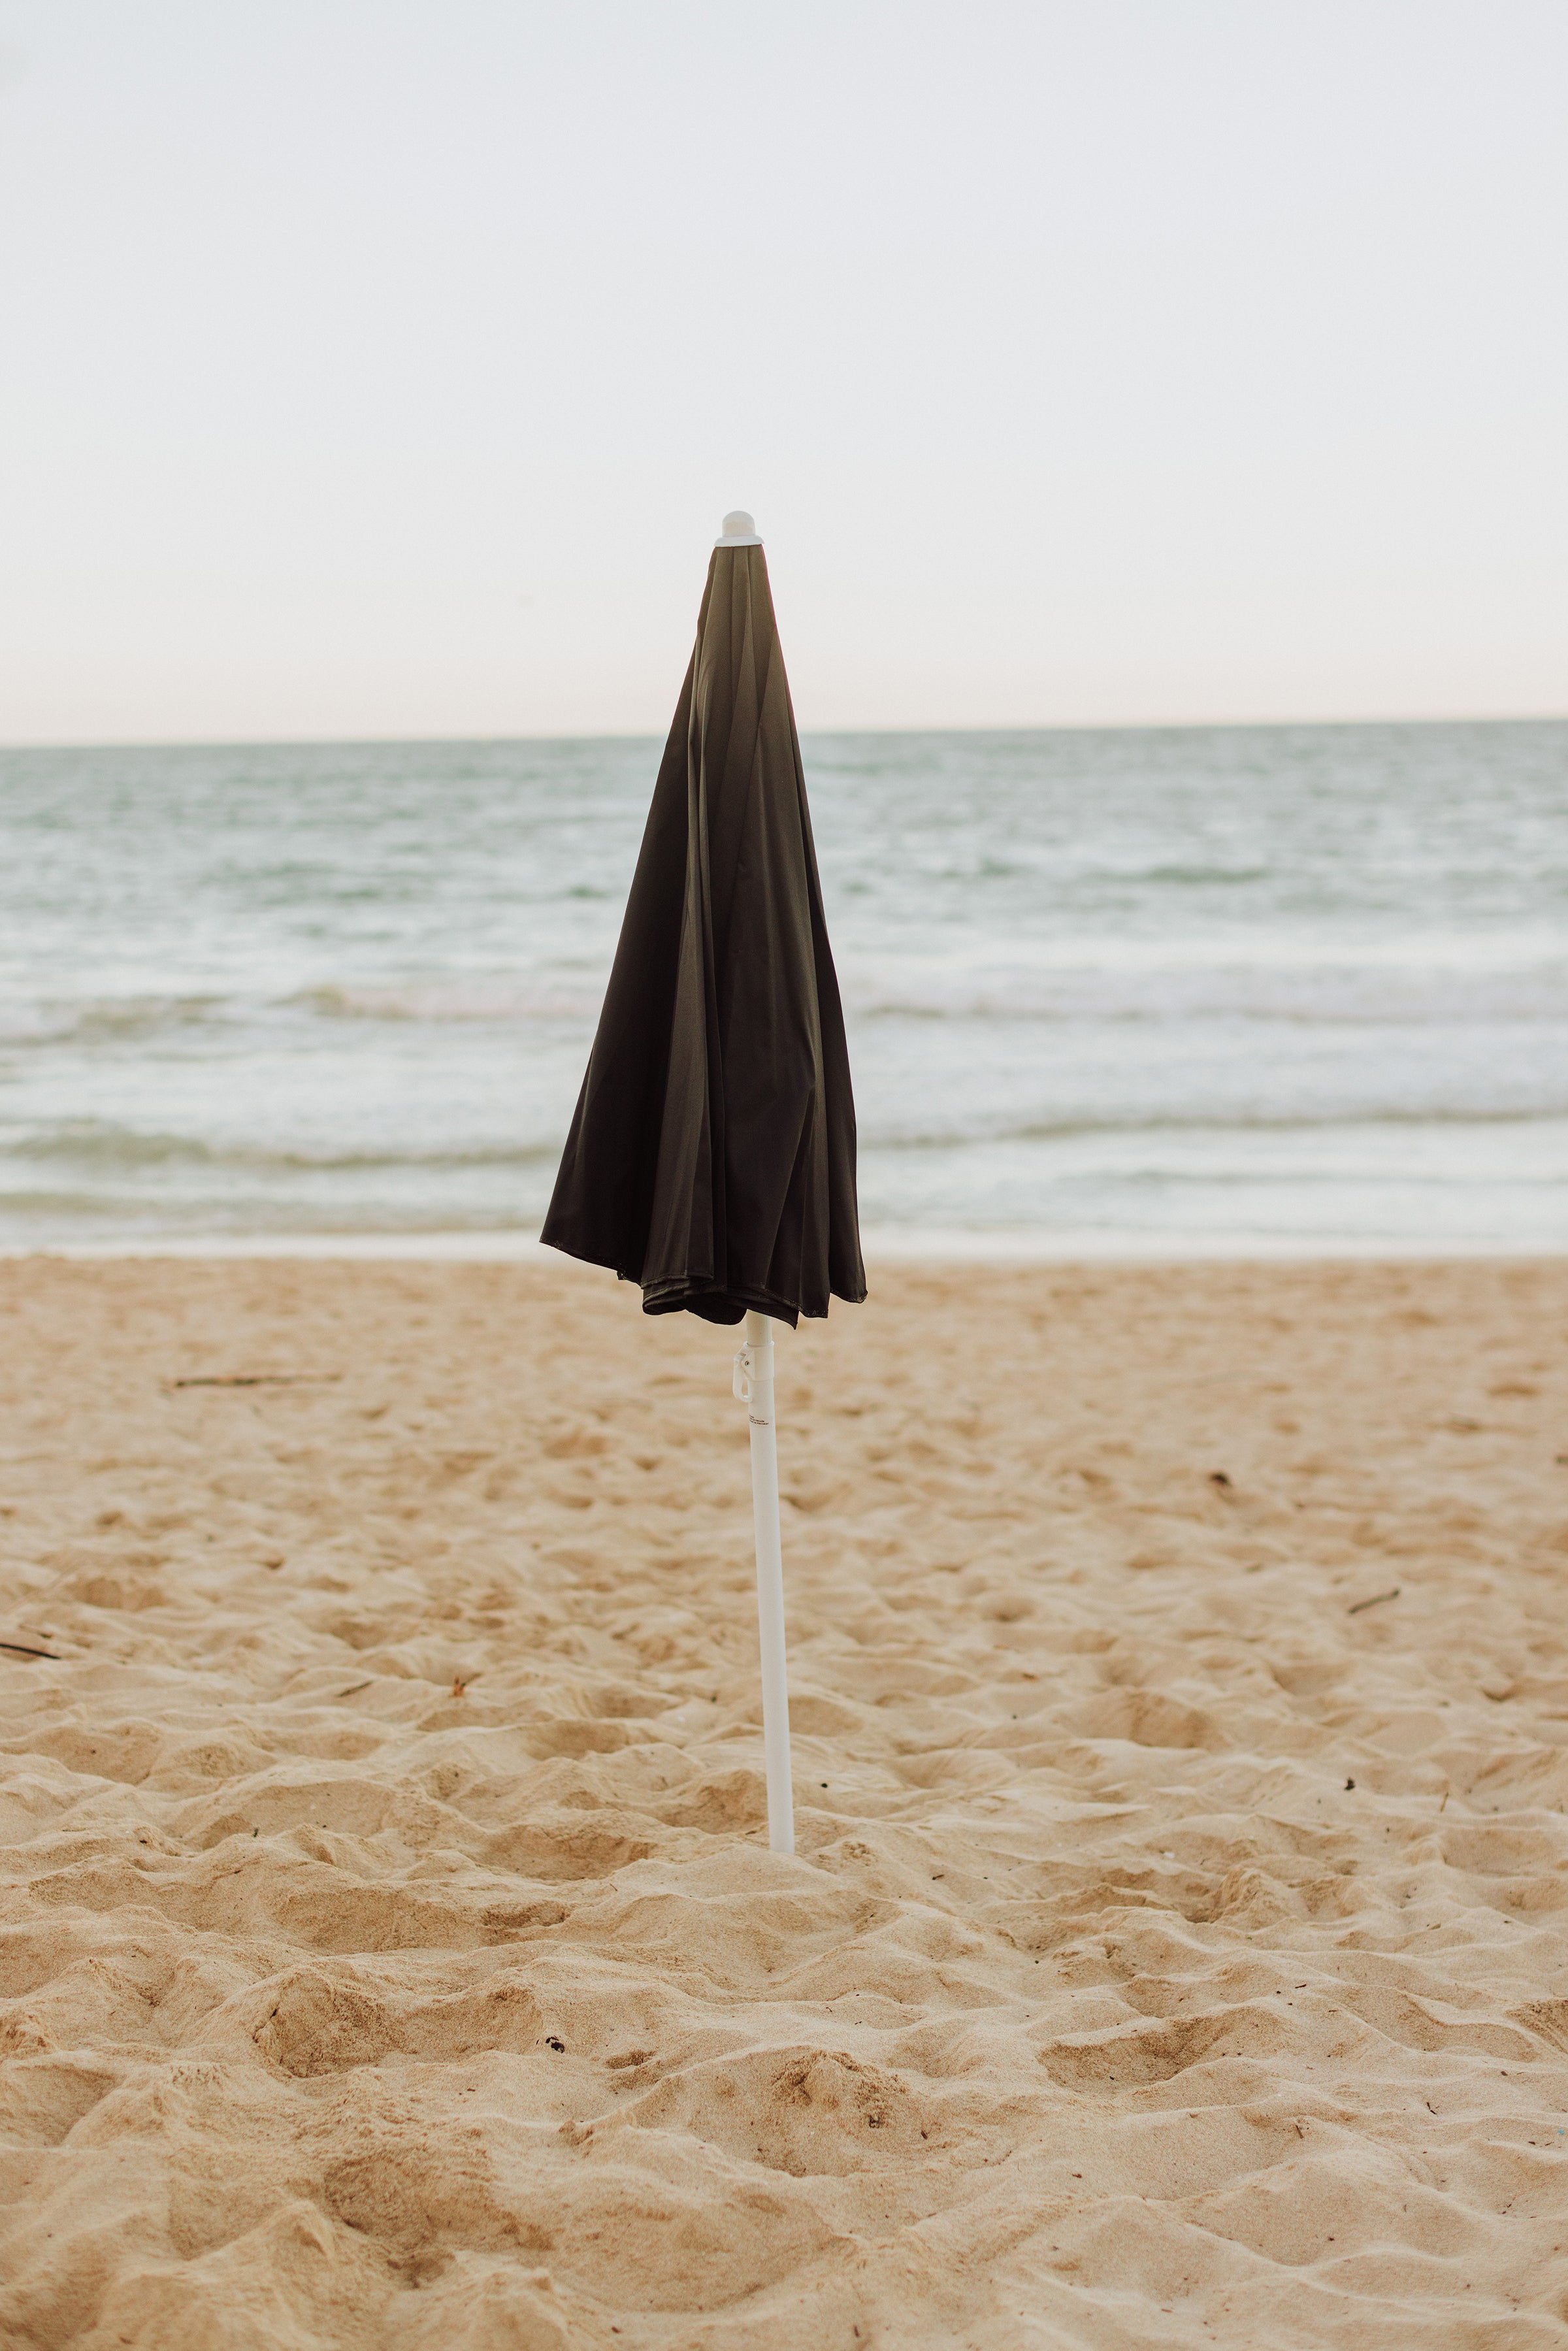 Iowa Hawkeyes - 5.5 Ft. Portable Beach Umbrella